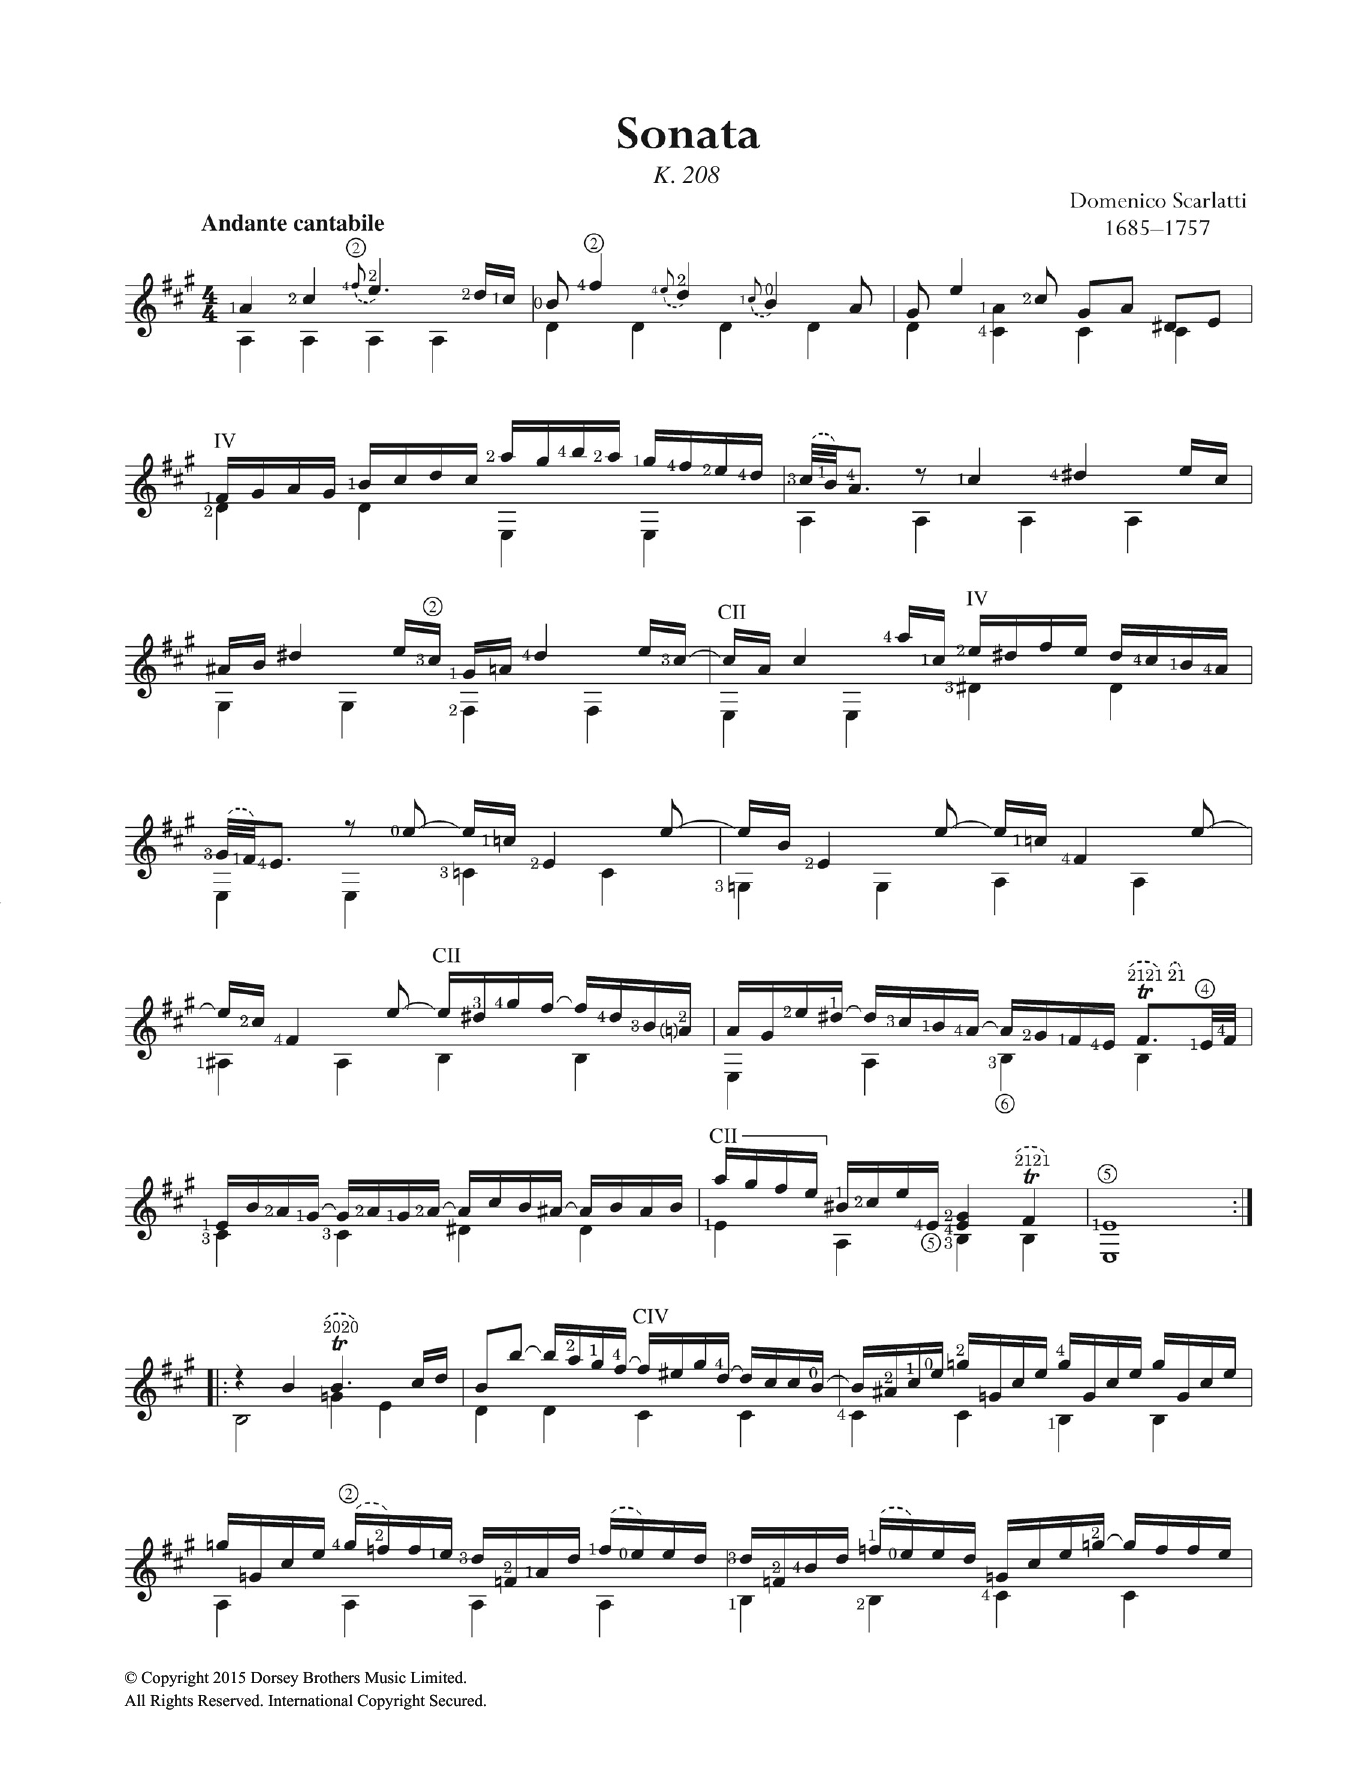 Domenico Scarlatti Sonata K.208 Sheet Music Notes & Chords for Guitar - Download or Print PDF